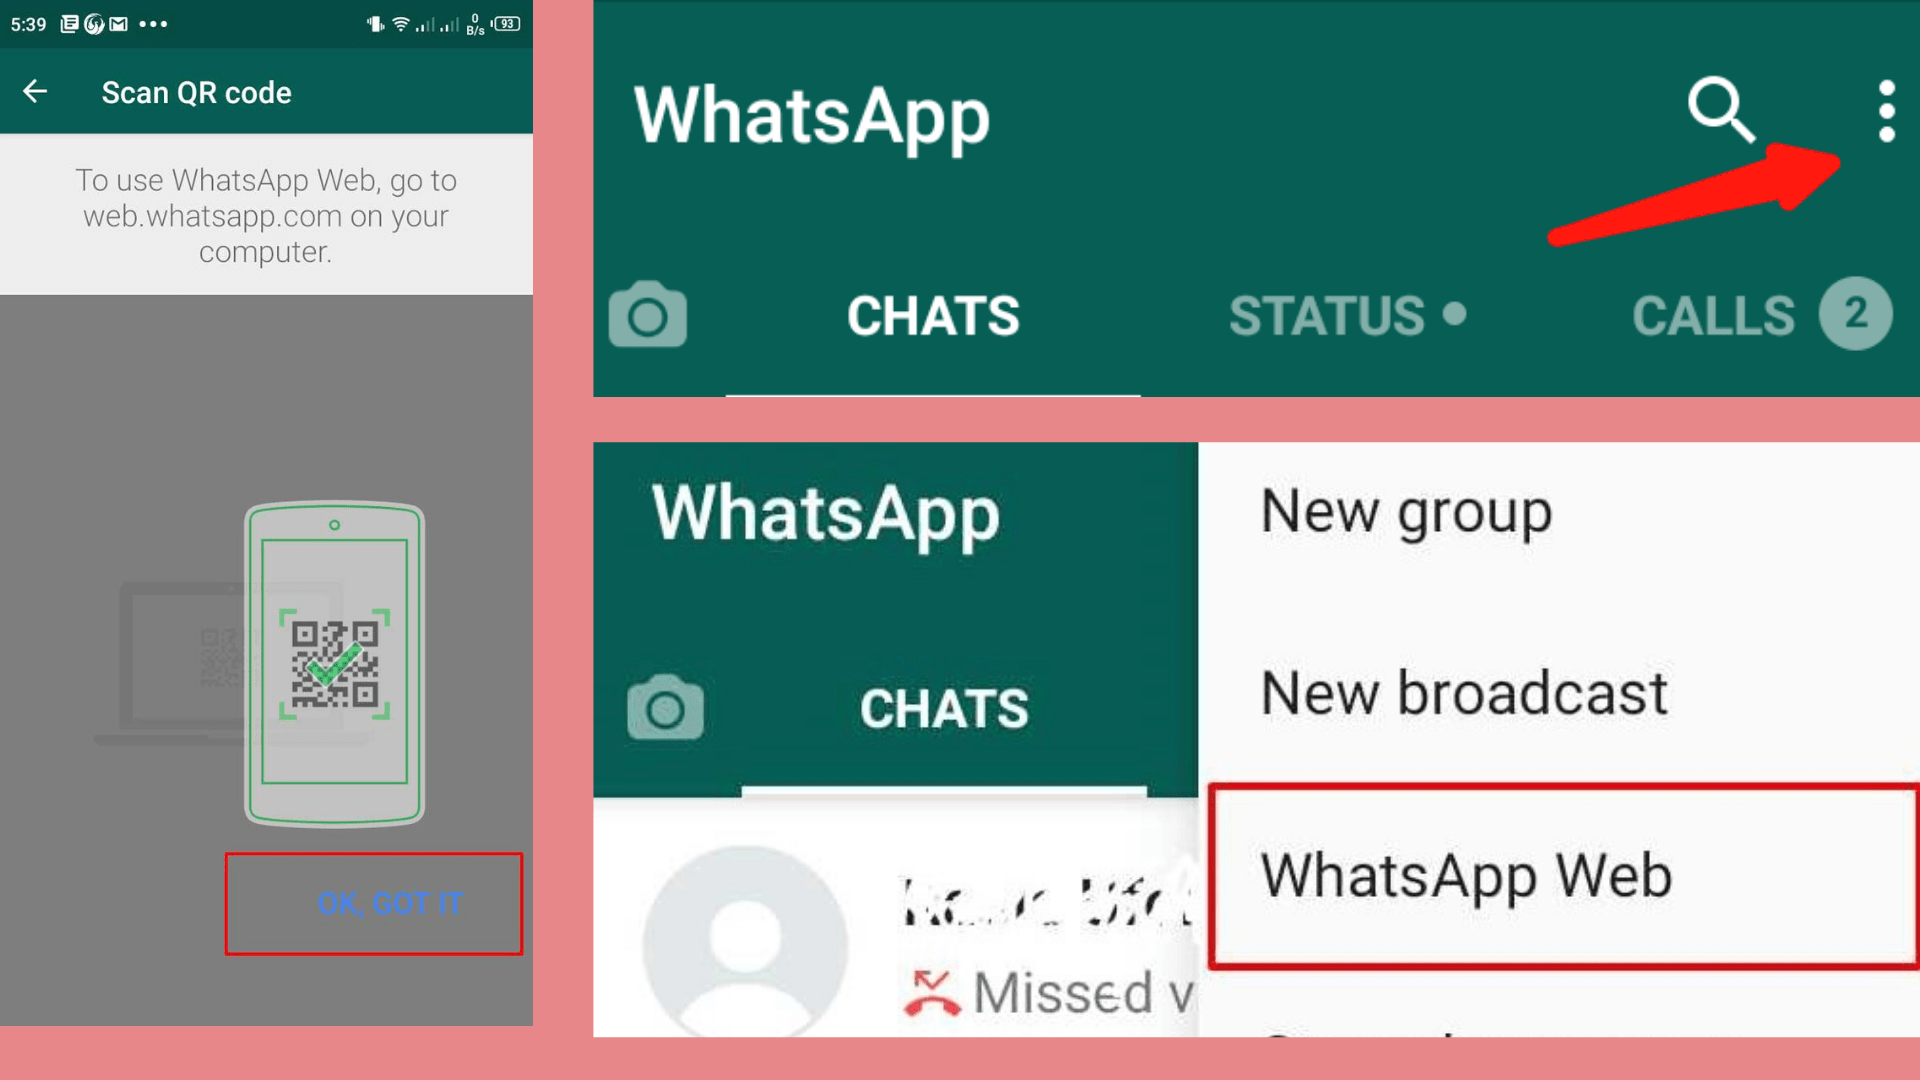 WhatsApp Web MX